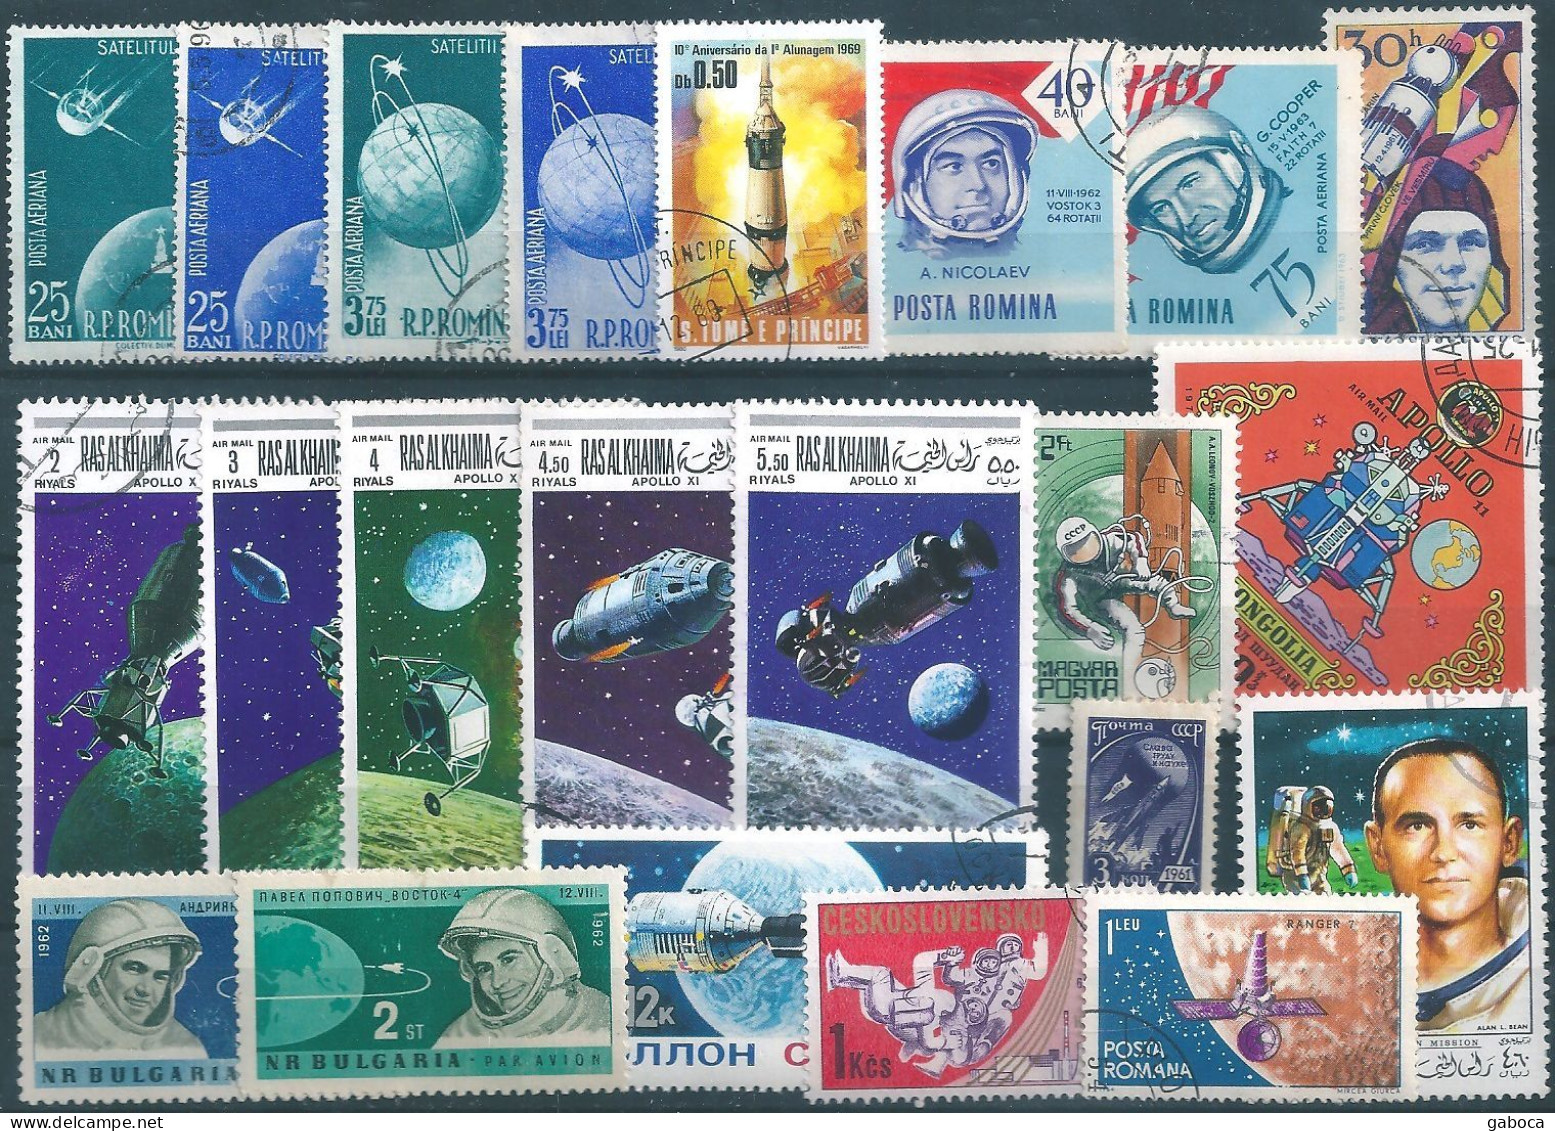 C4746 Space Spacetravel Satellite Astronaut Planet Flag 1xSet+18xStamp Used  Lot#574 - Verzamelingen